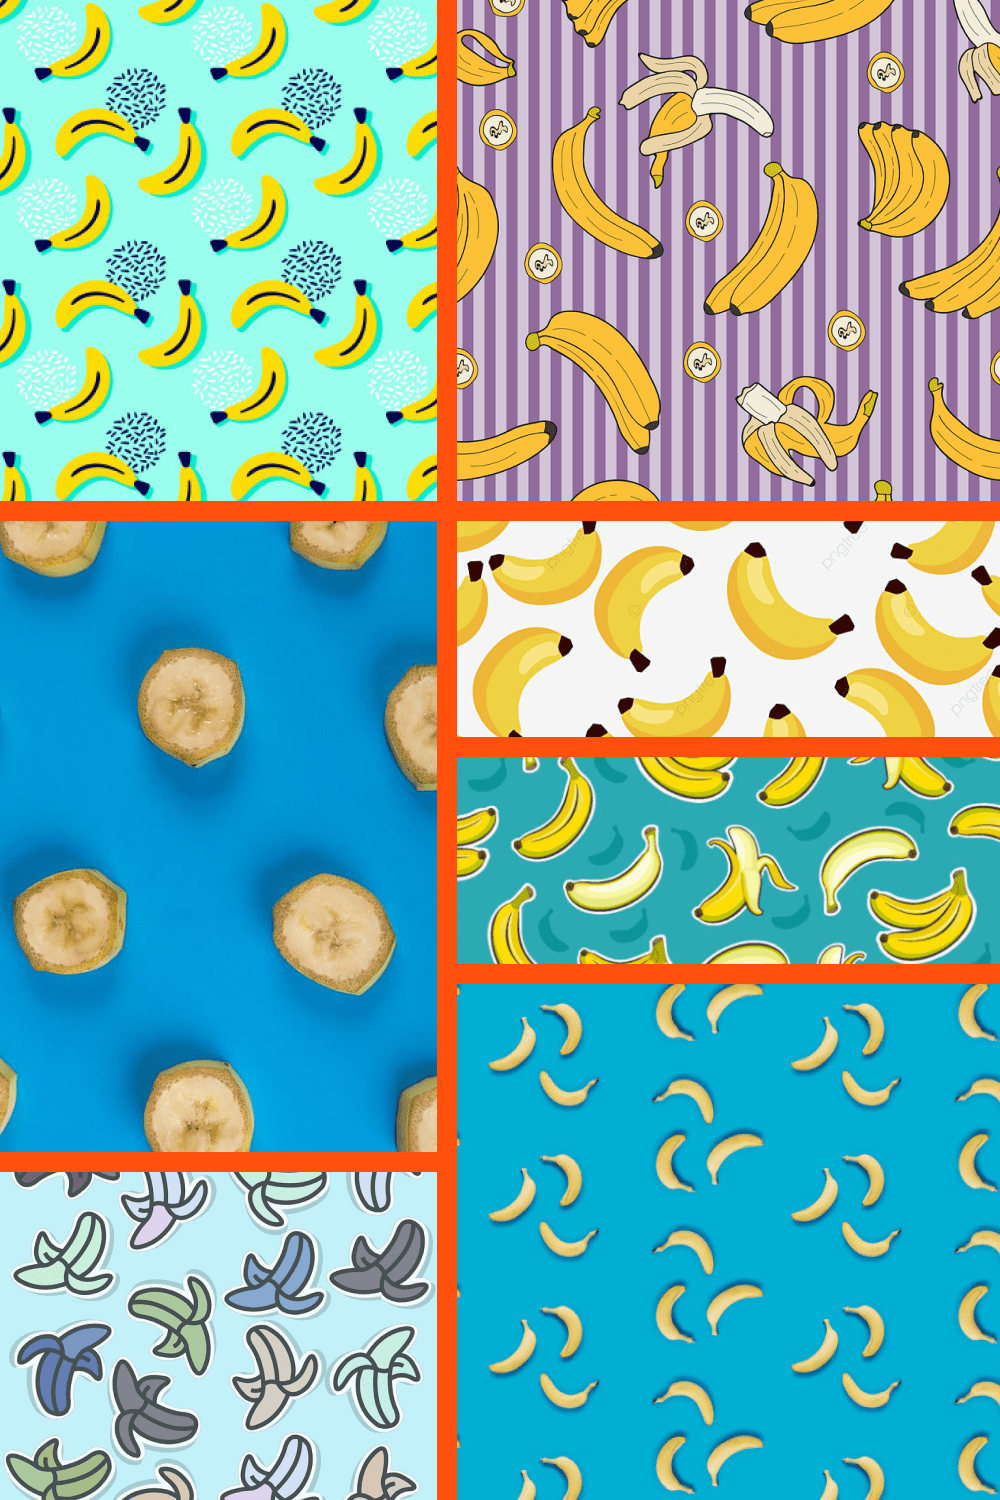 Bananes texture Pinterest.